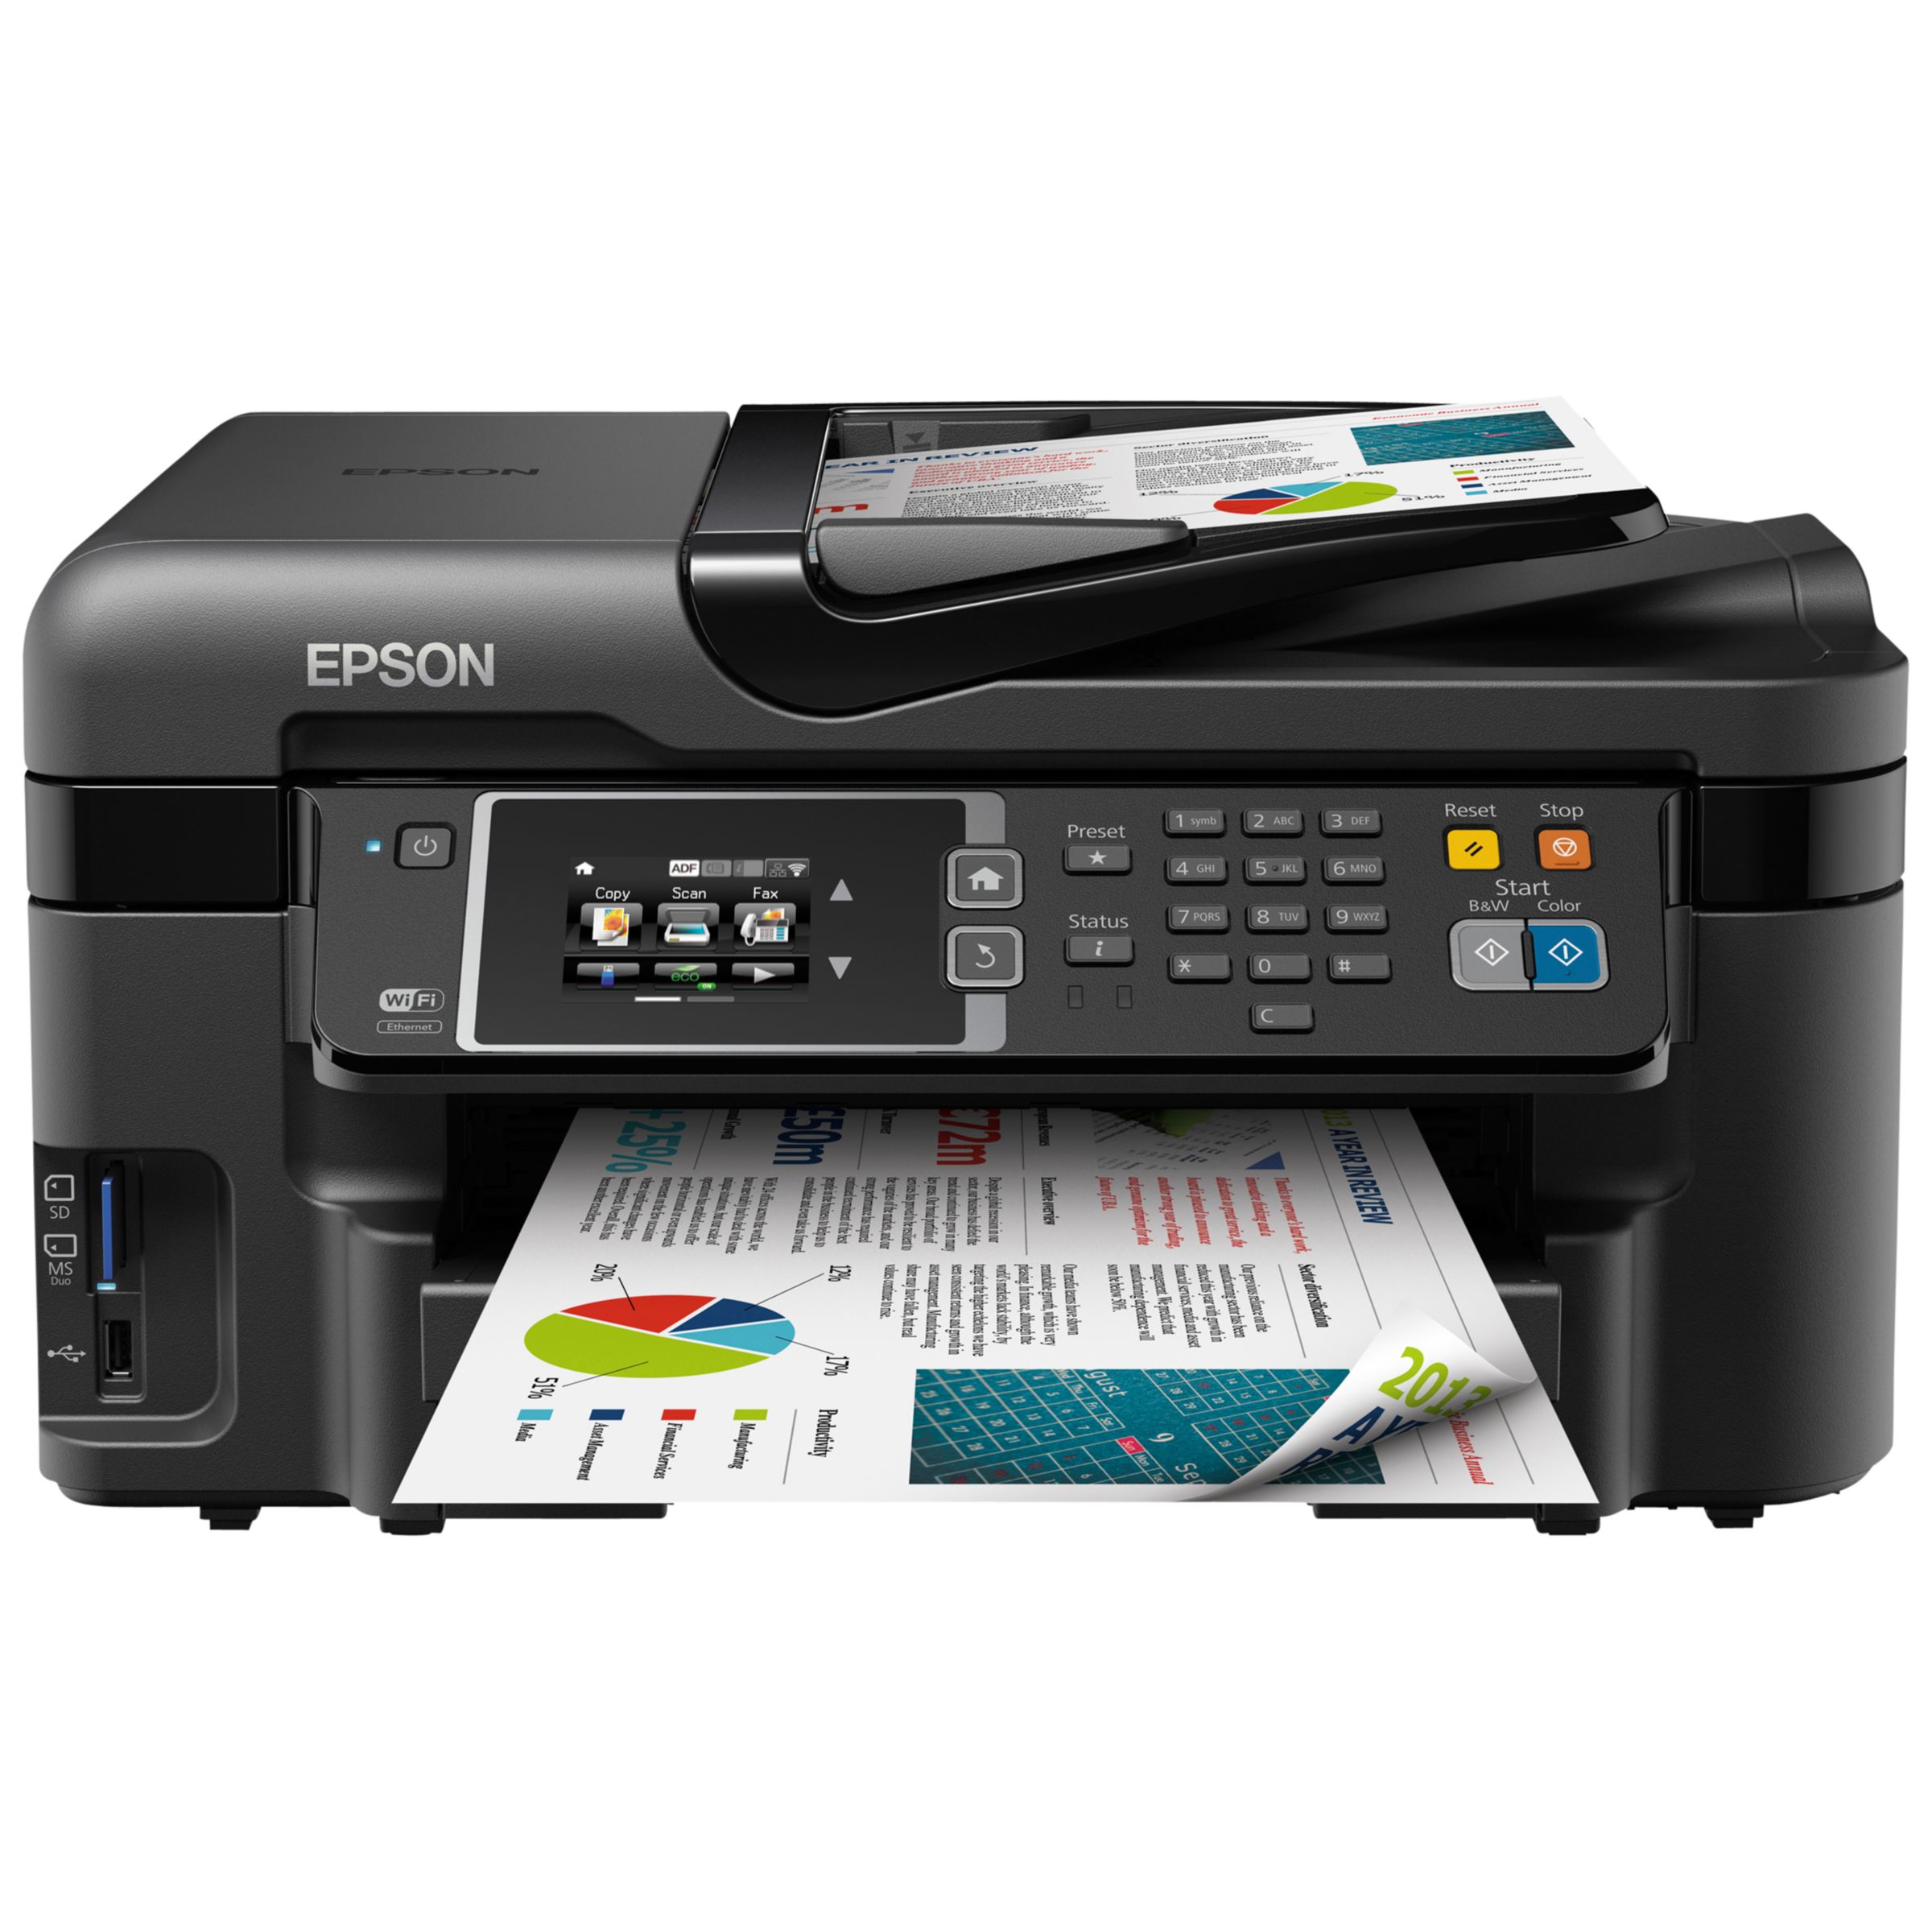 Epson WorkForce WF-3620 All-In-One Wireless Printer, Black